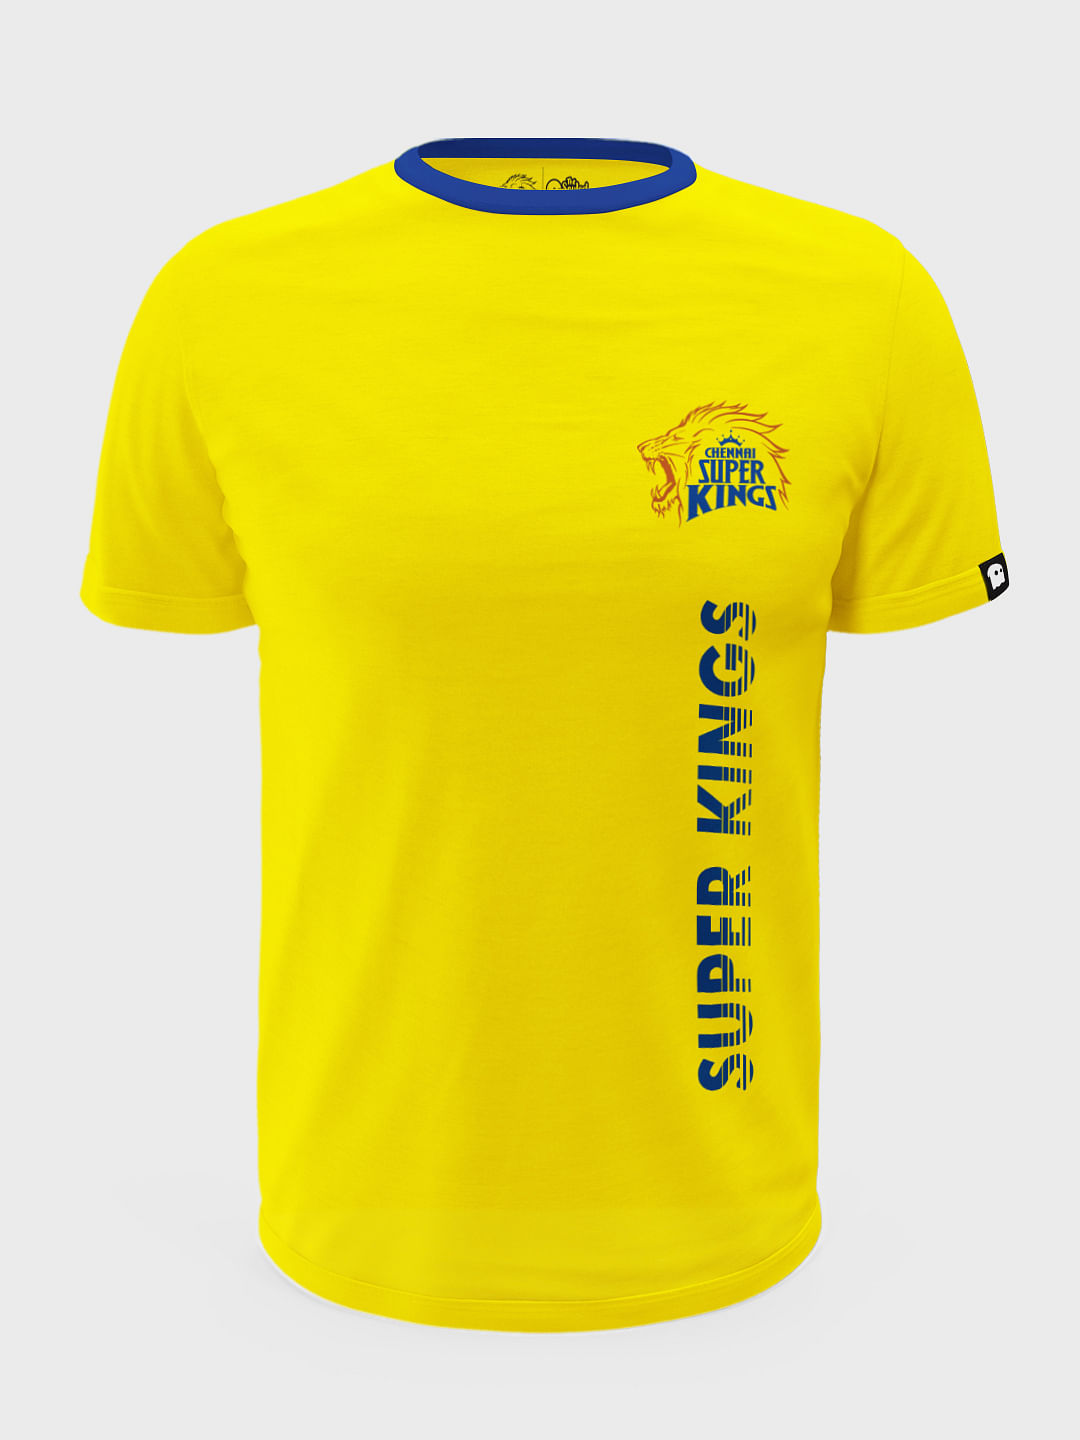 Buy > chennai super kings shirt > in stock